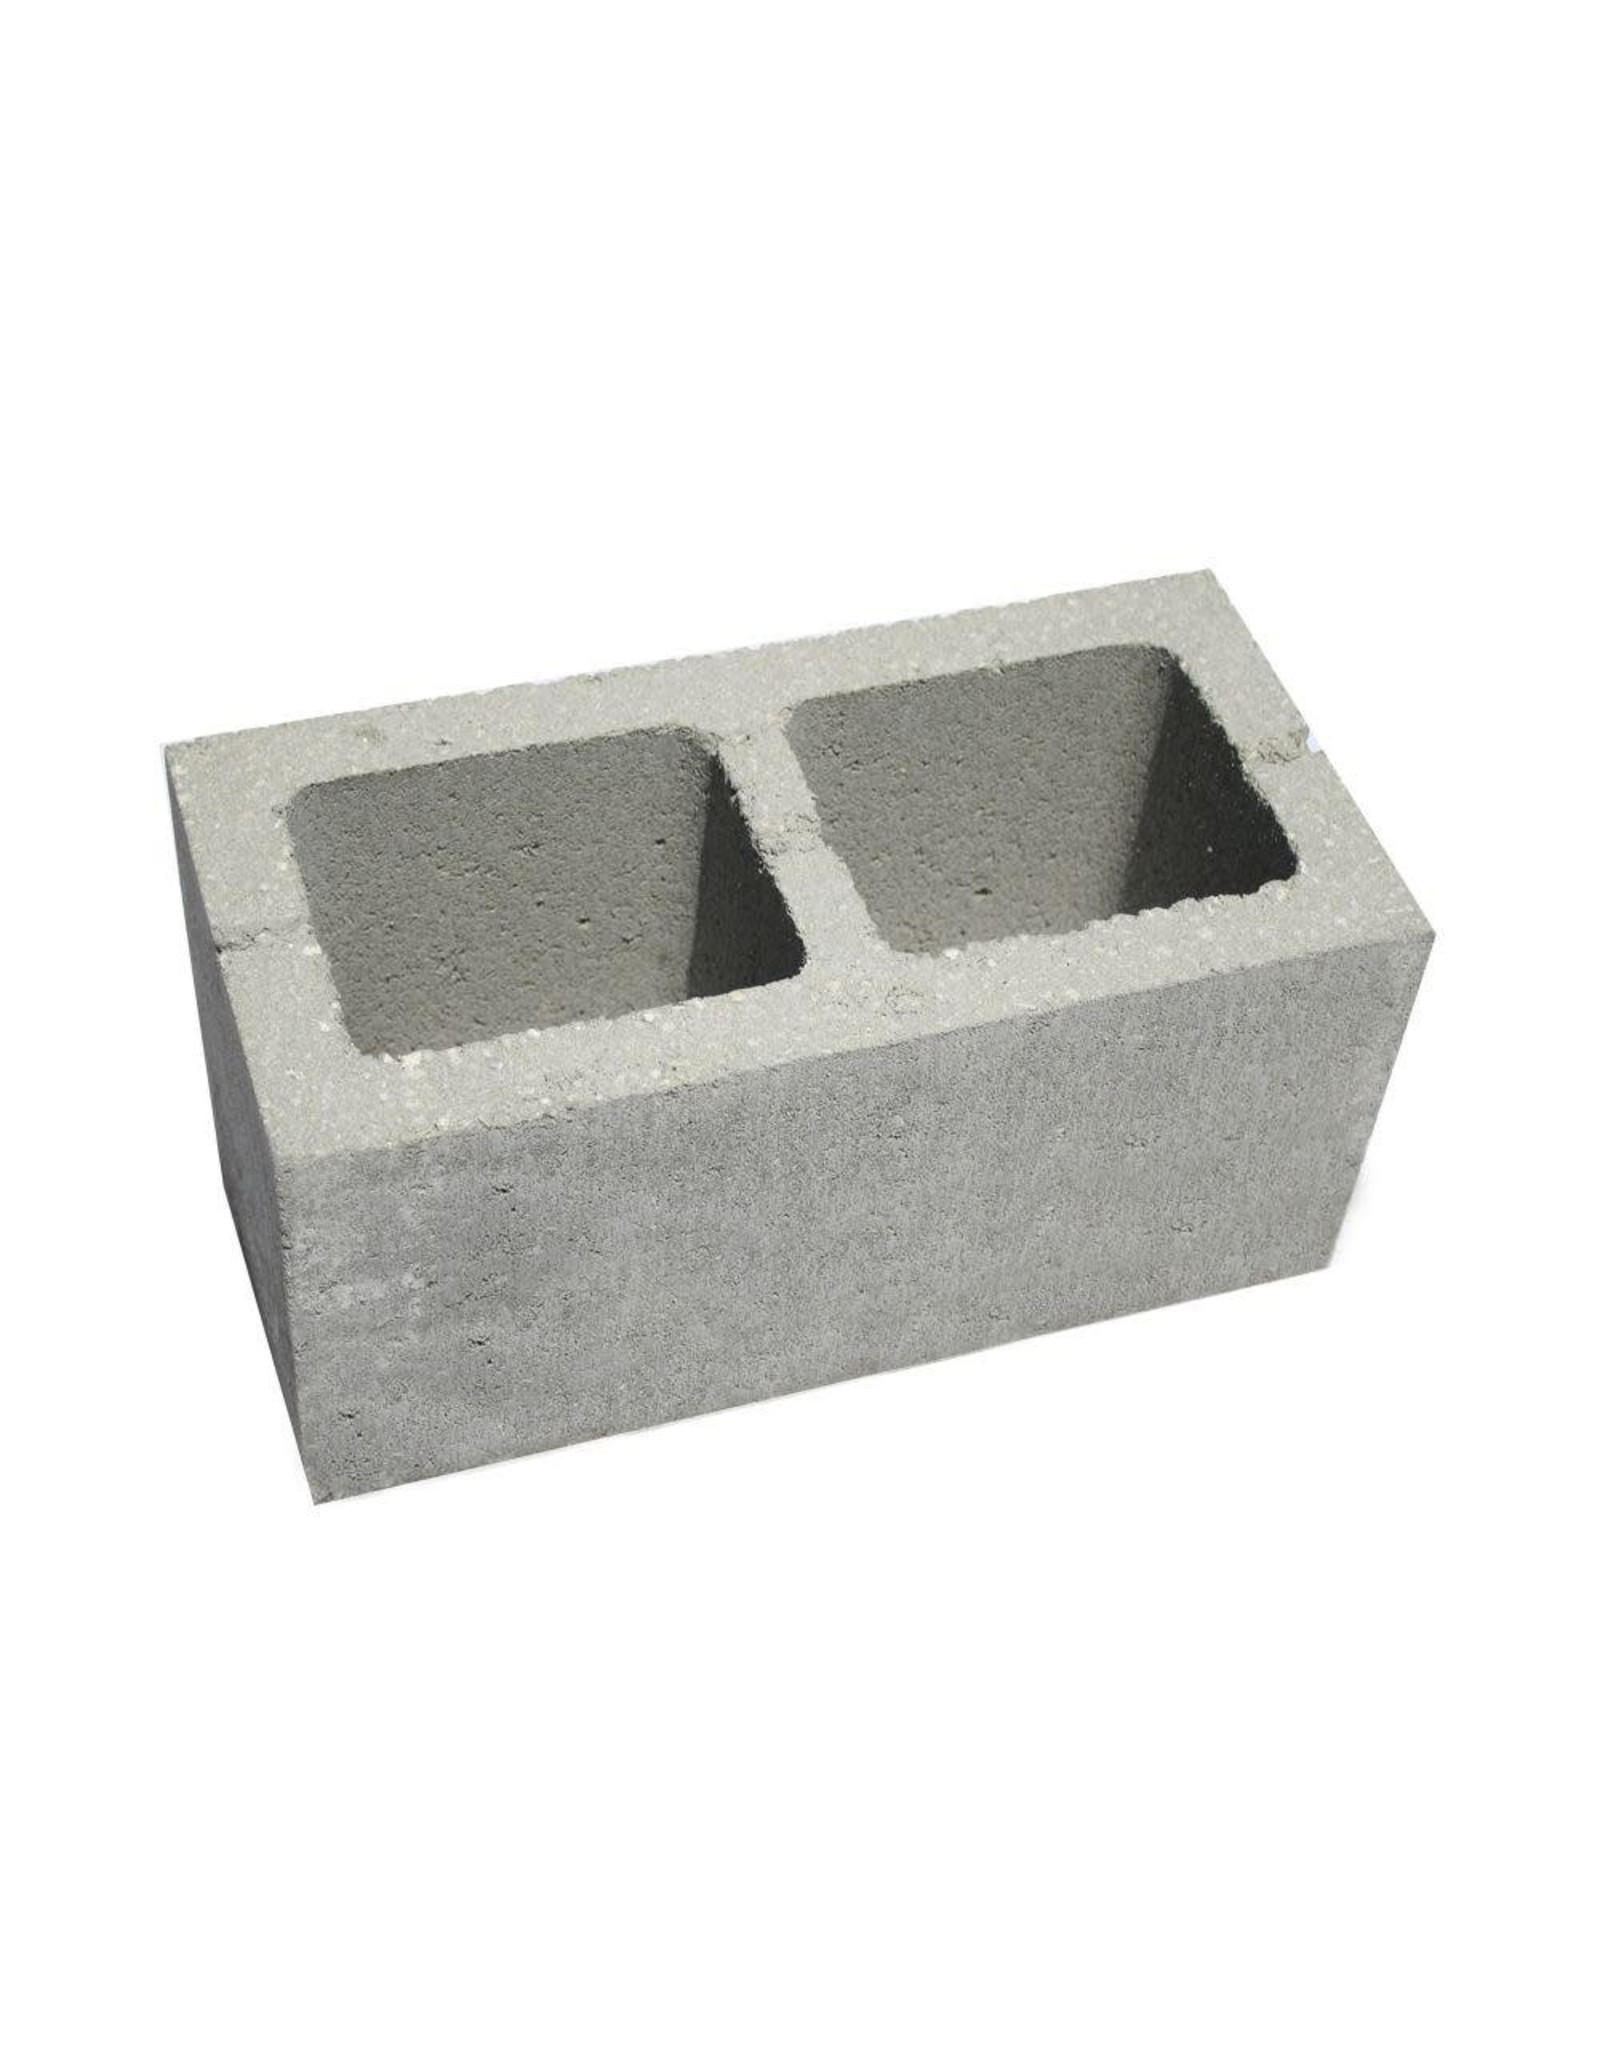 Concrete 8x8x16 Standard Cored Block*